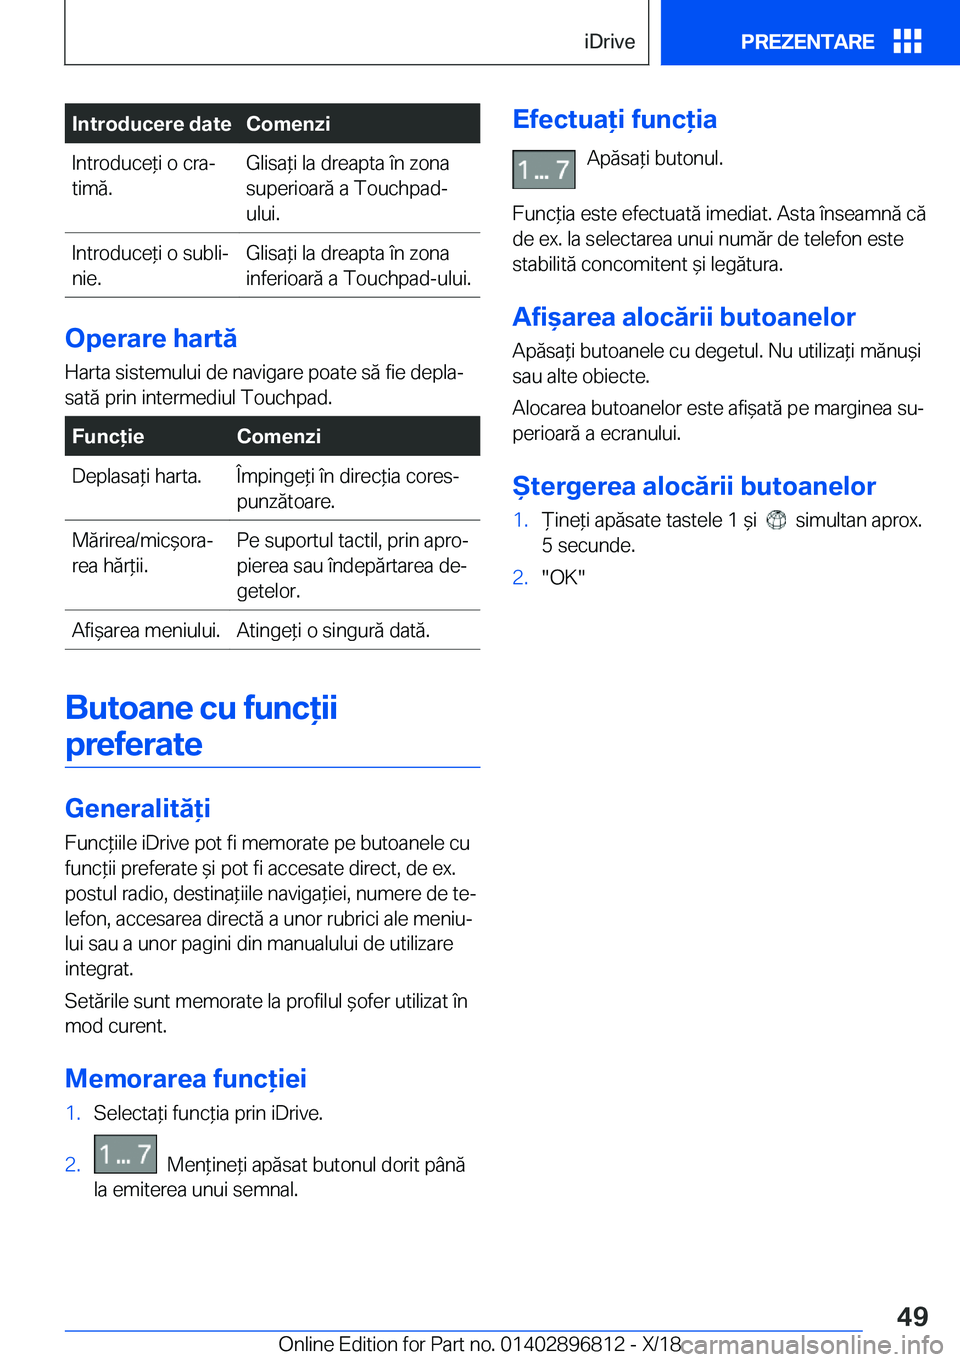 BMW 7 SERIES 2019  Ghiduri De Utilizare (in Romanian) �I�n�t�r�o�d�u�c�e�r�e��d�a�t�e�C�o�m�e�n�z�i�I�n�t�r�o�d�u�c�e*�i��o��c�r�aj
�t�i�m�